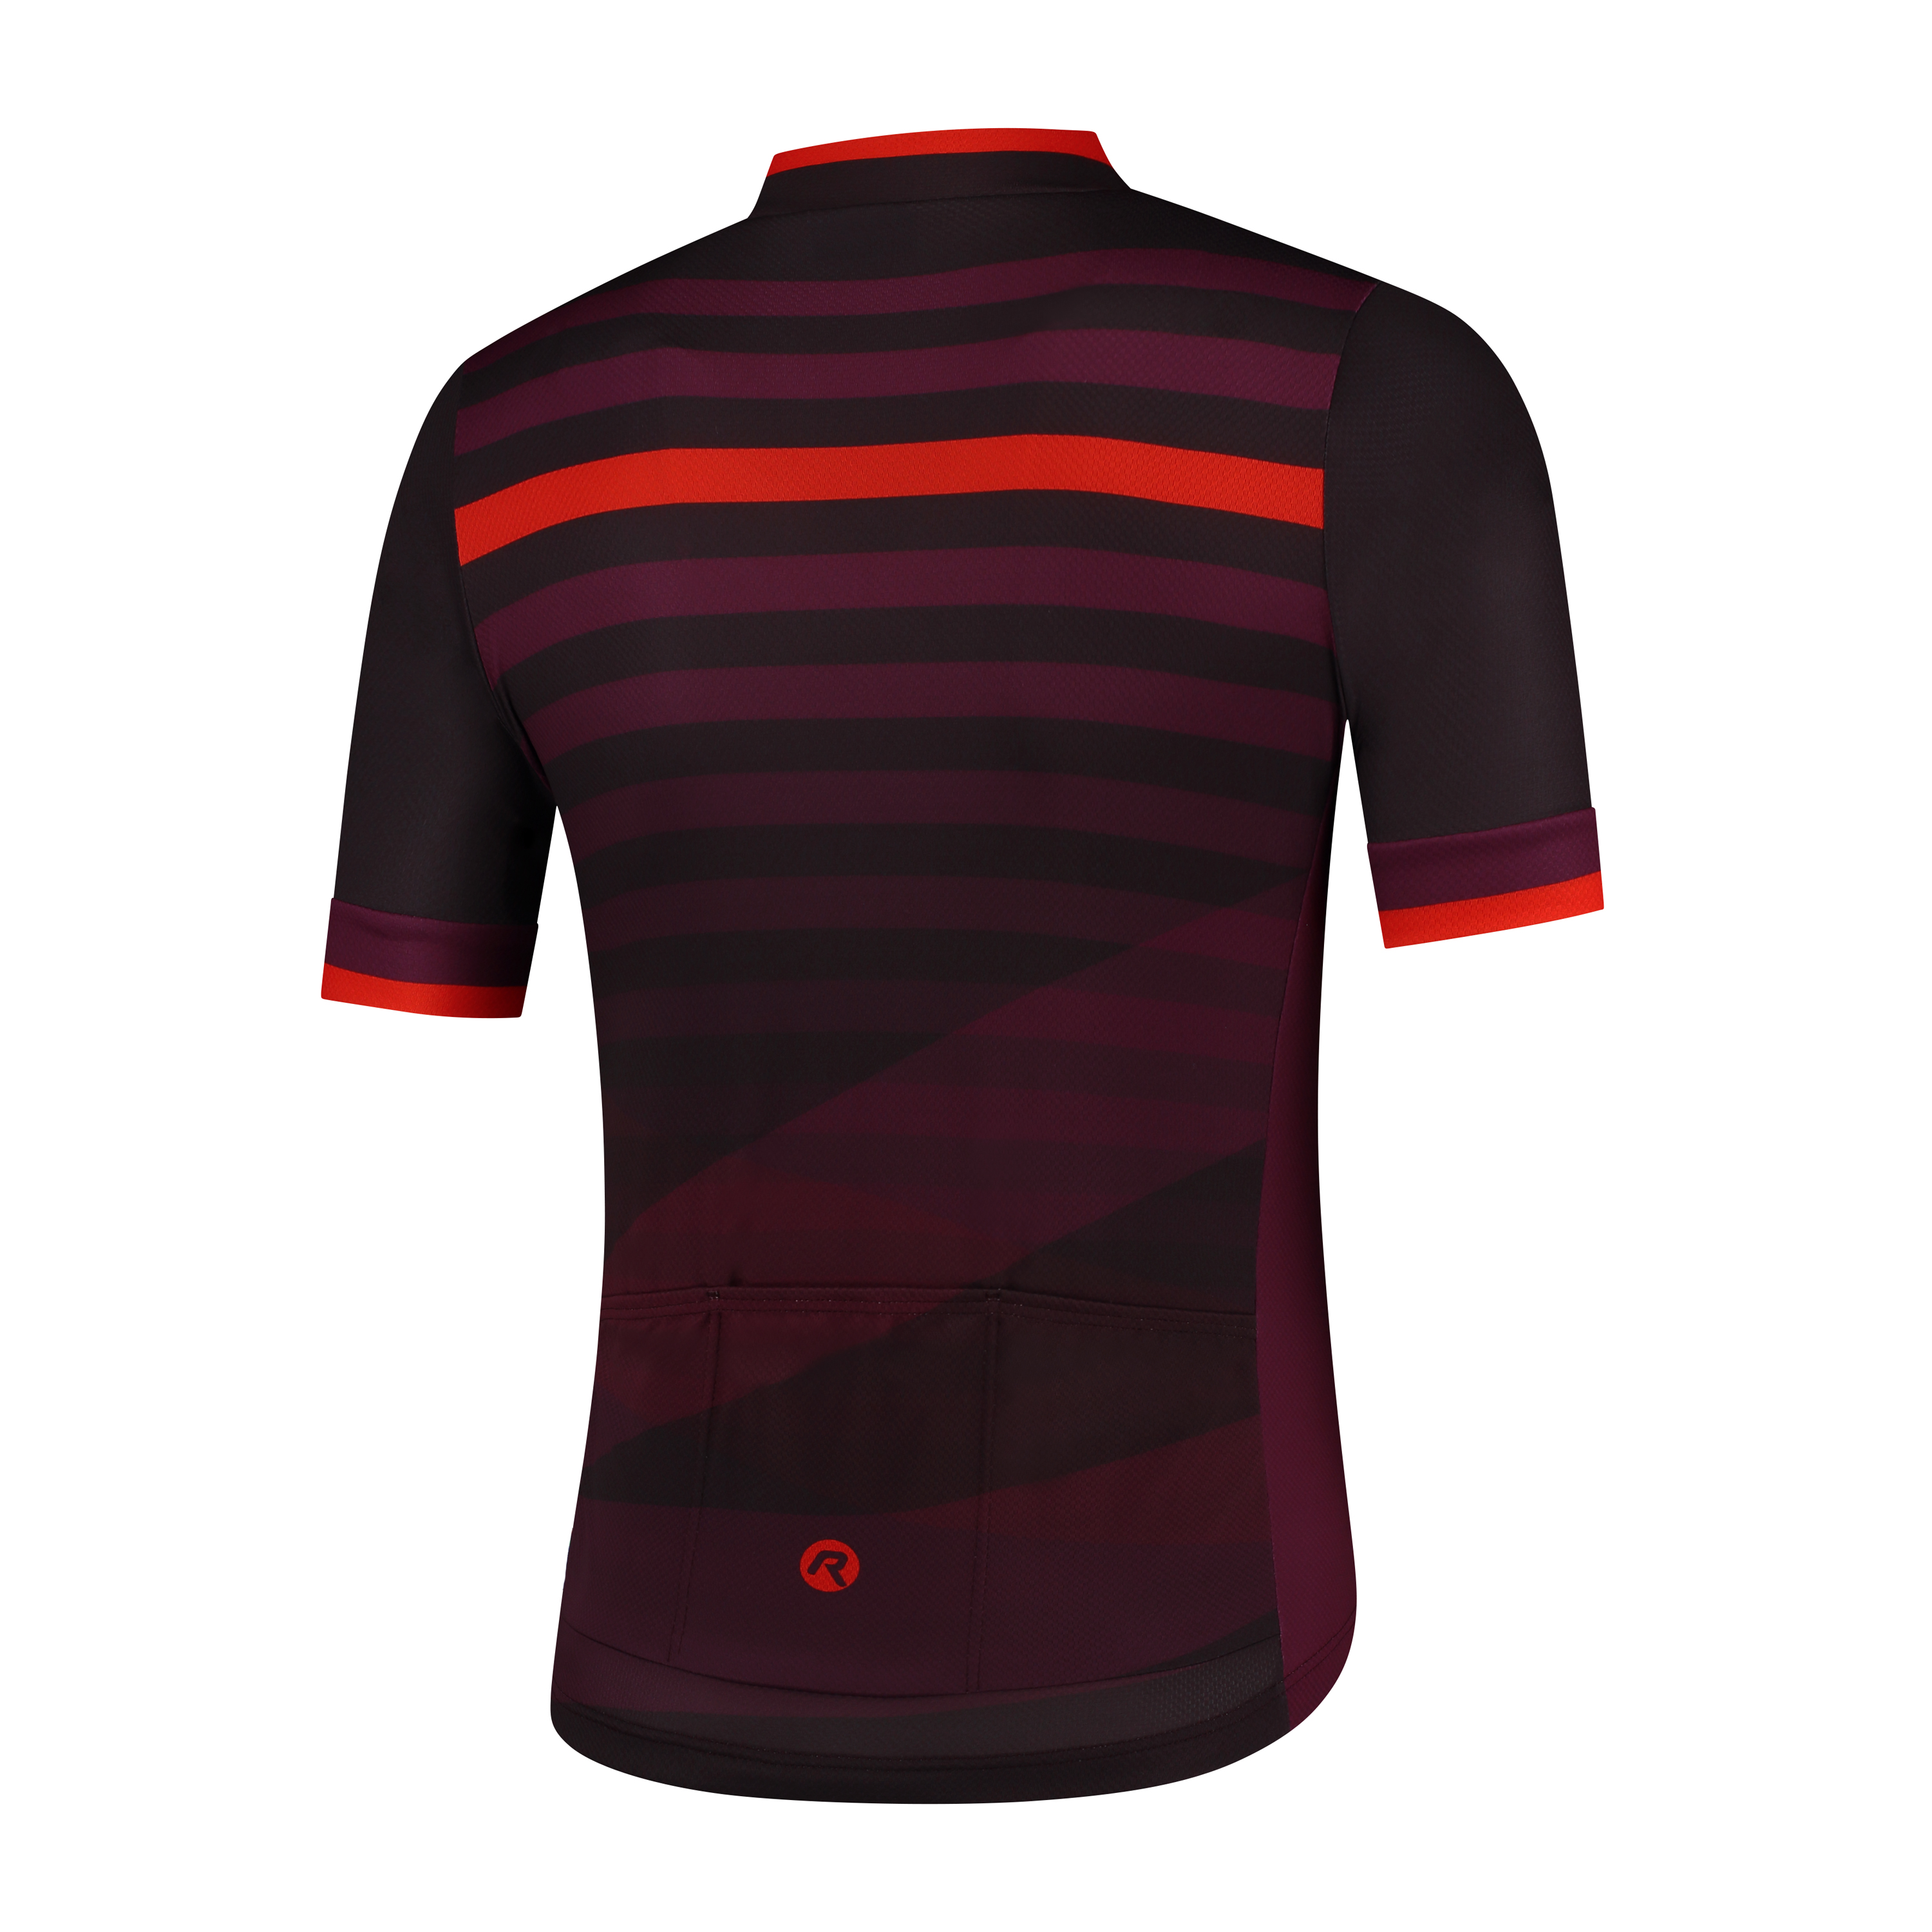 Heren fietsshirt KM Stripe Bordeaux/rood/purper